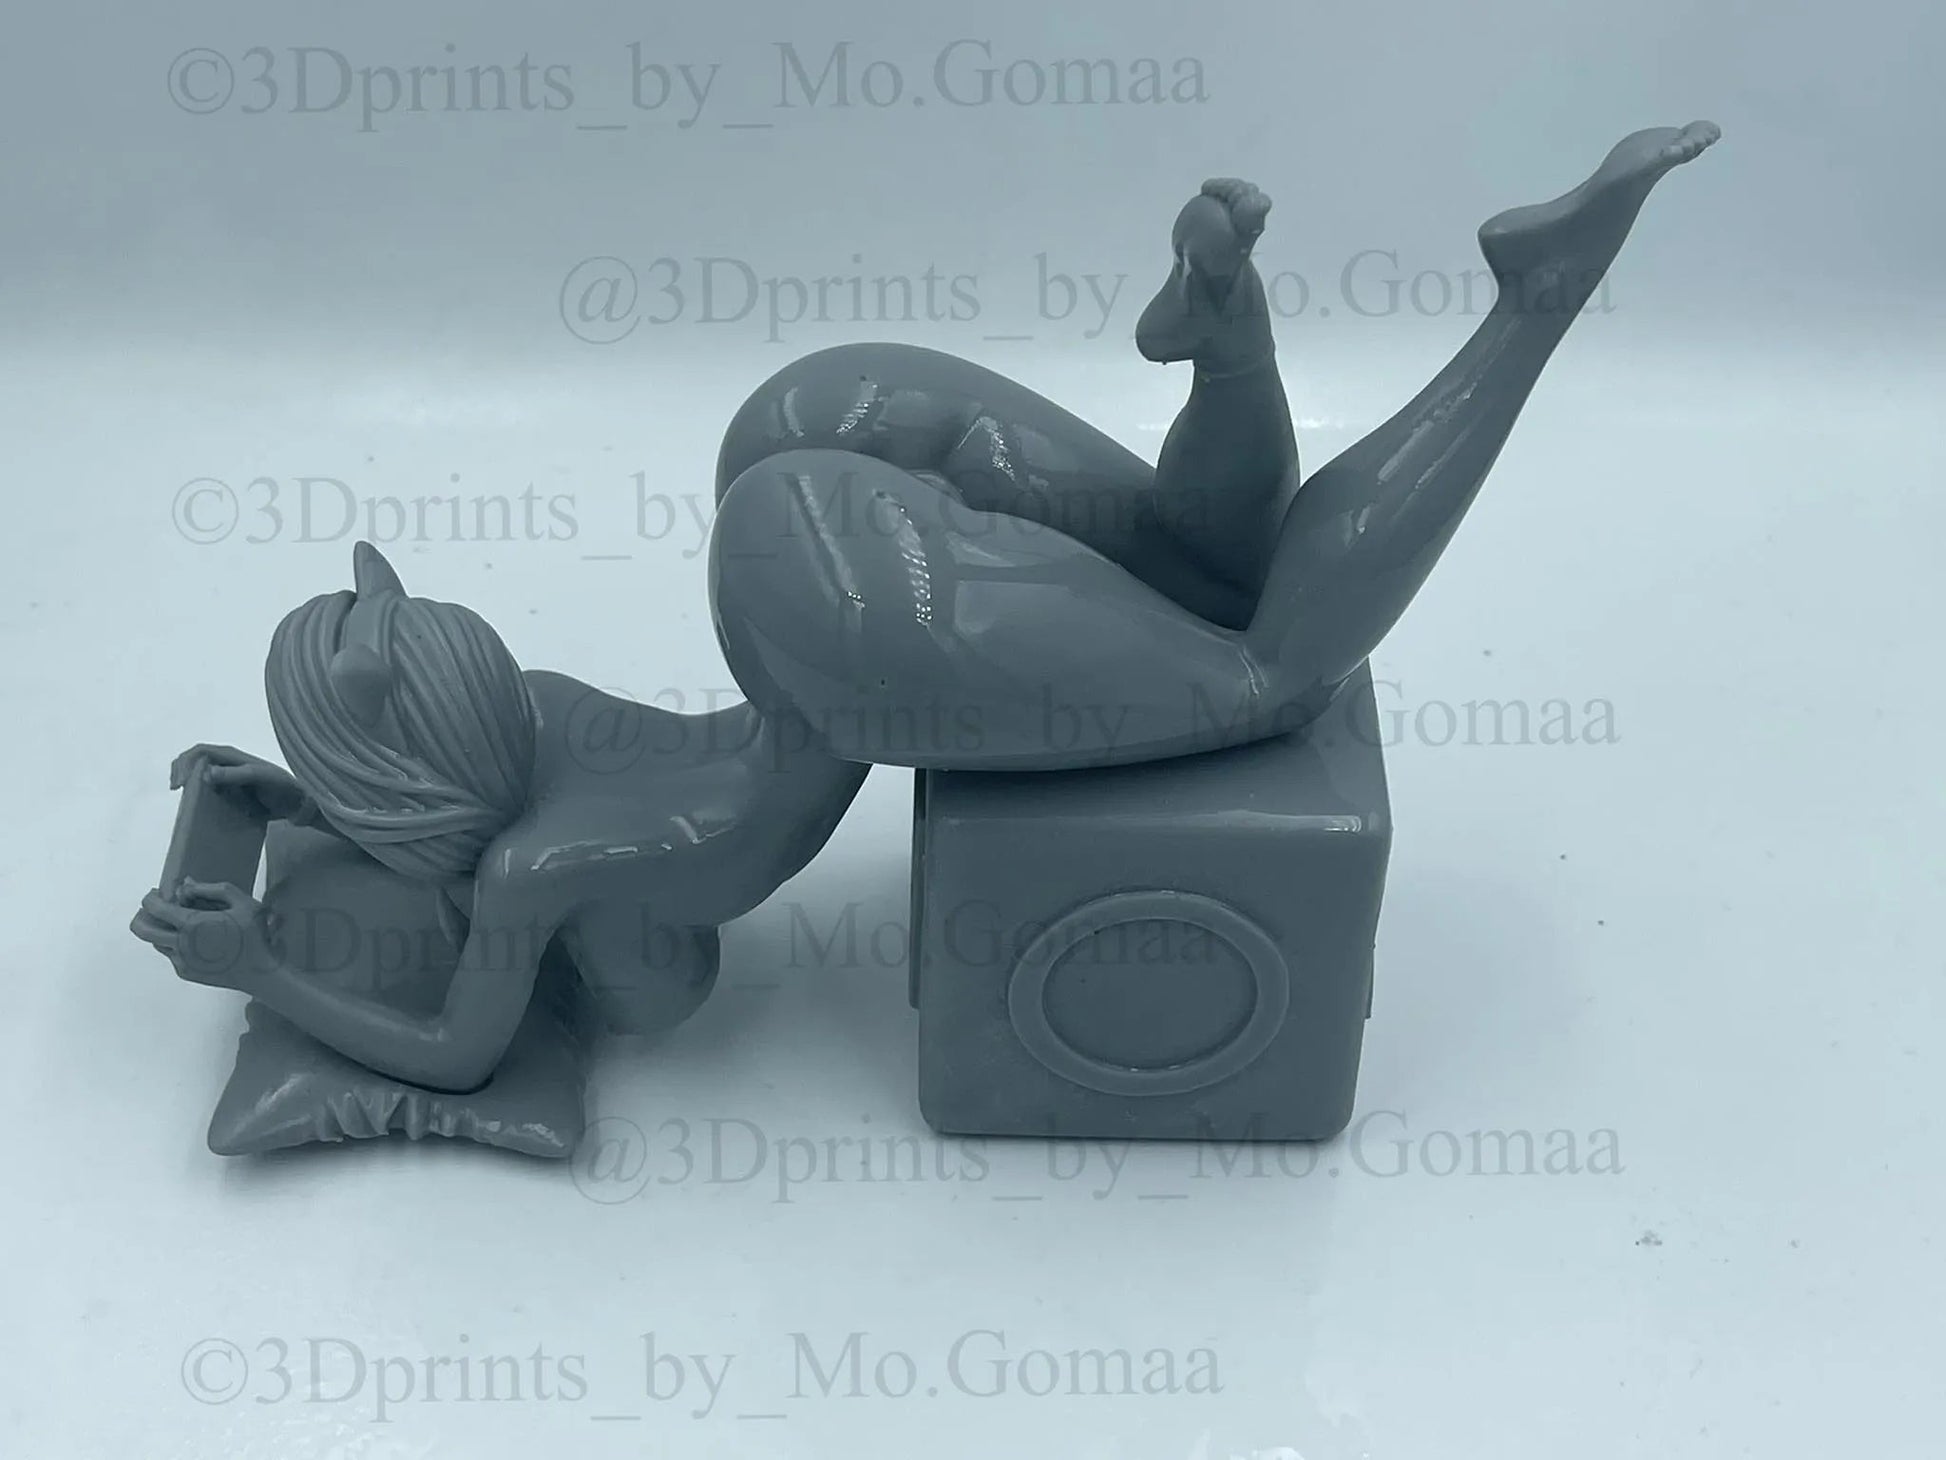 Gamer Girl 3 – NSFW 3D Printed Figurine – FunArt by Digital Dark Pin-Ups